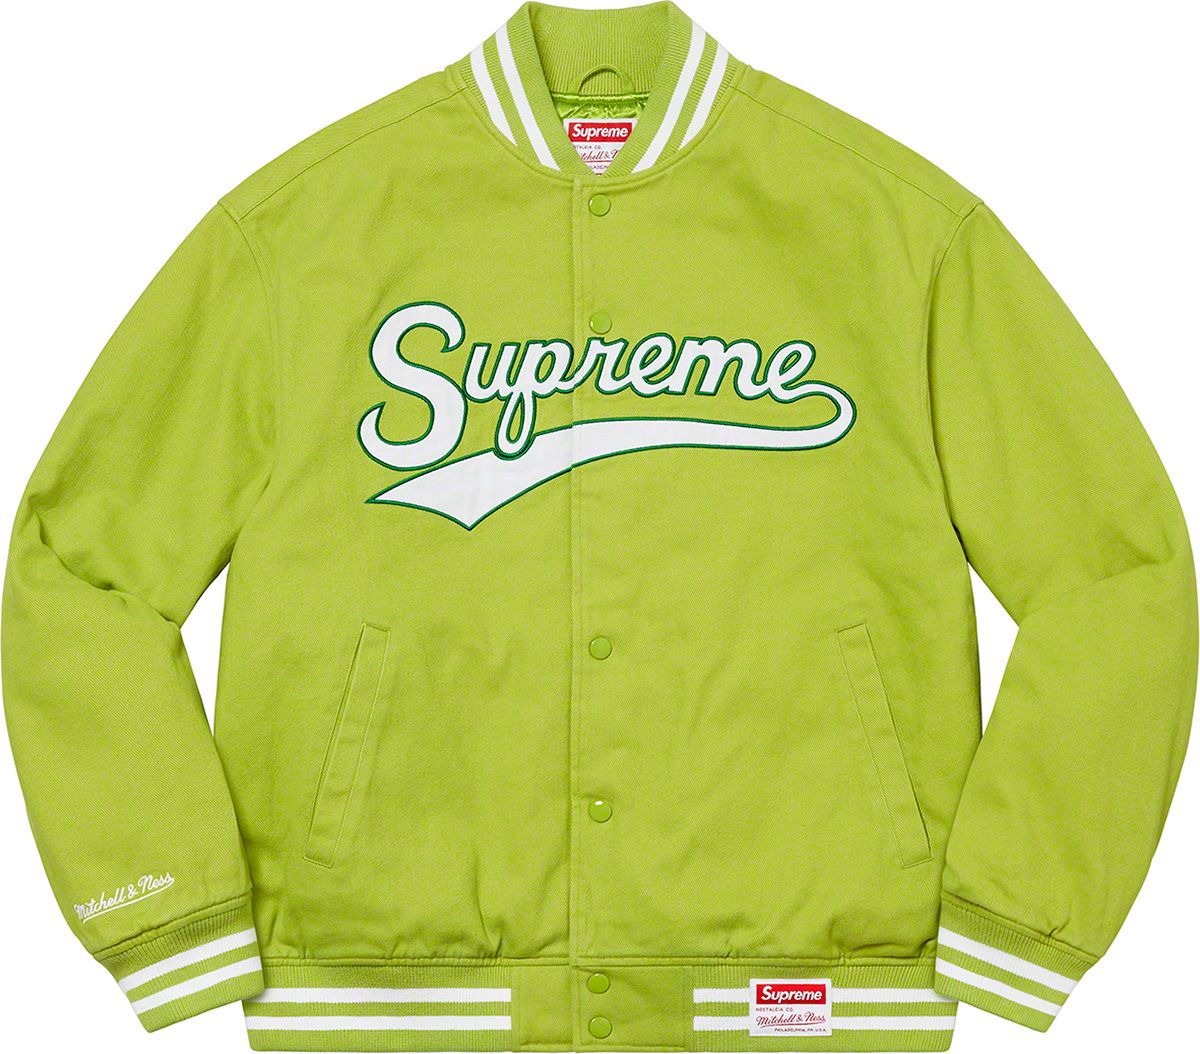 Supreme®/Mitchell & Ness® Doughboy Twill Varsity Jacket - Fall